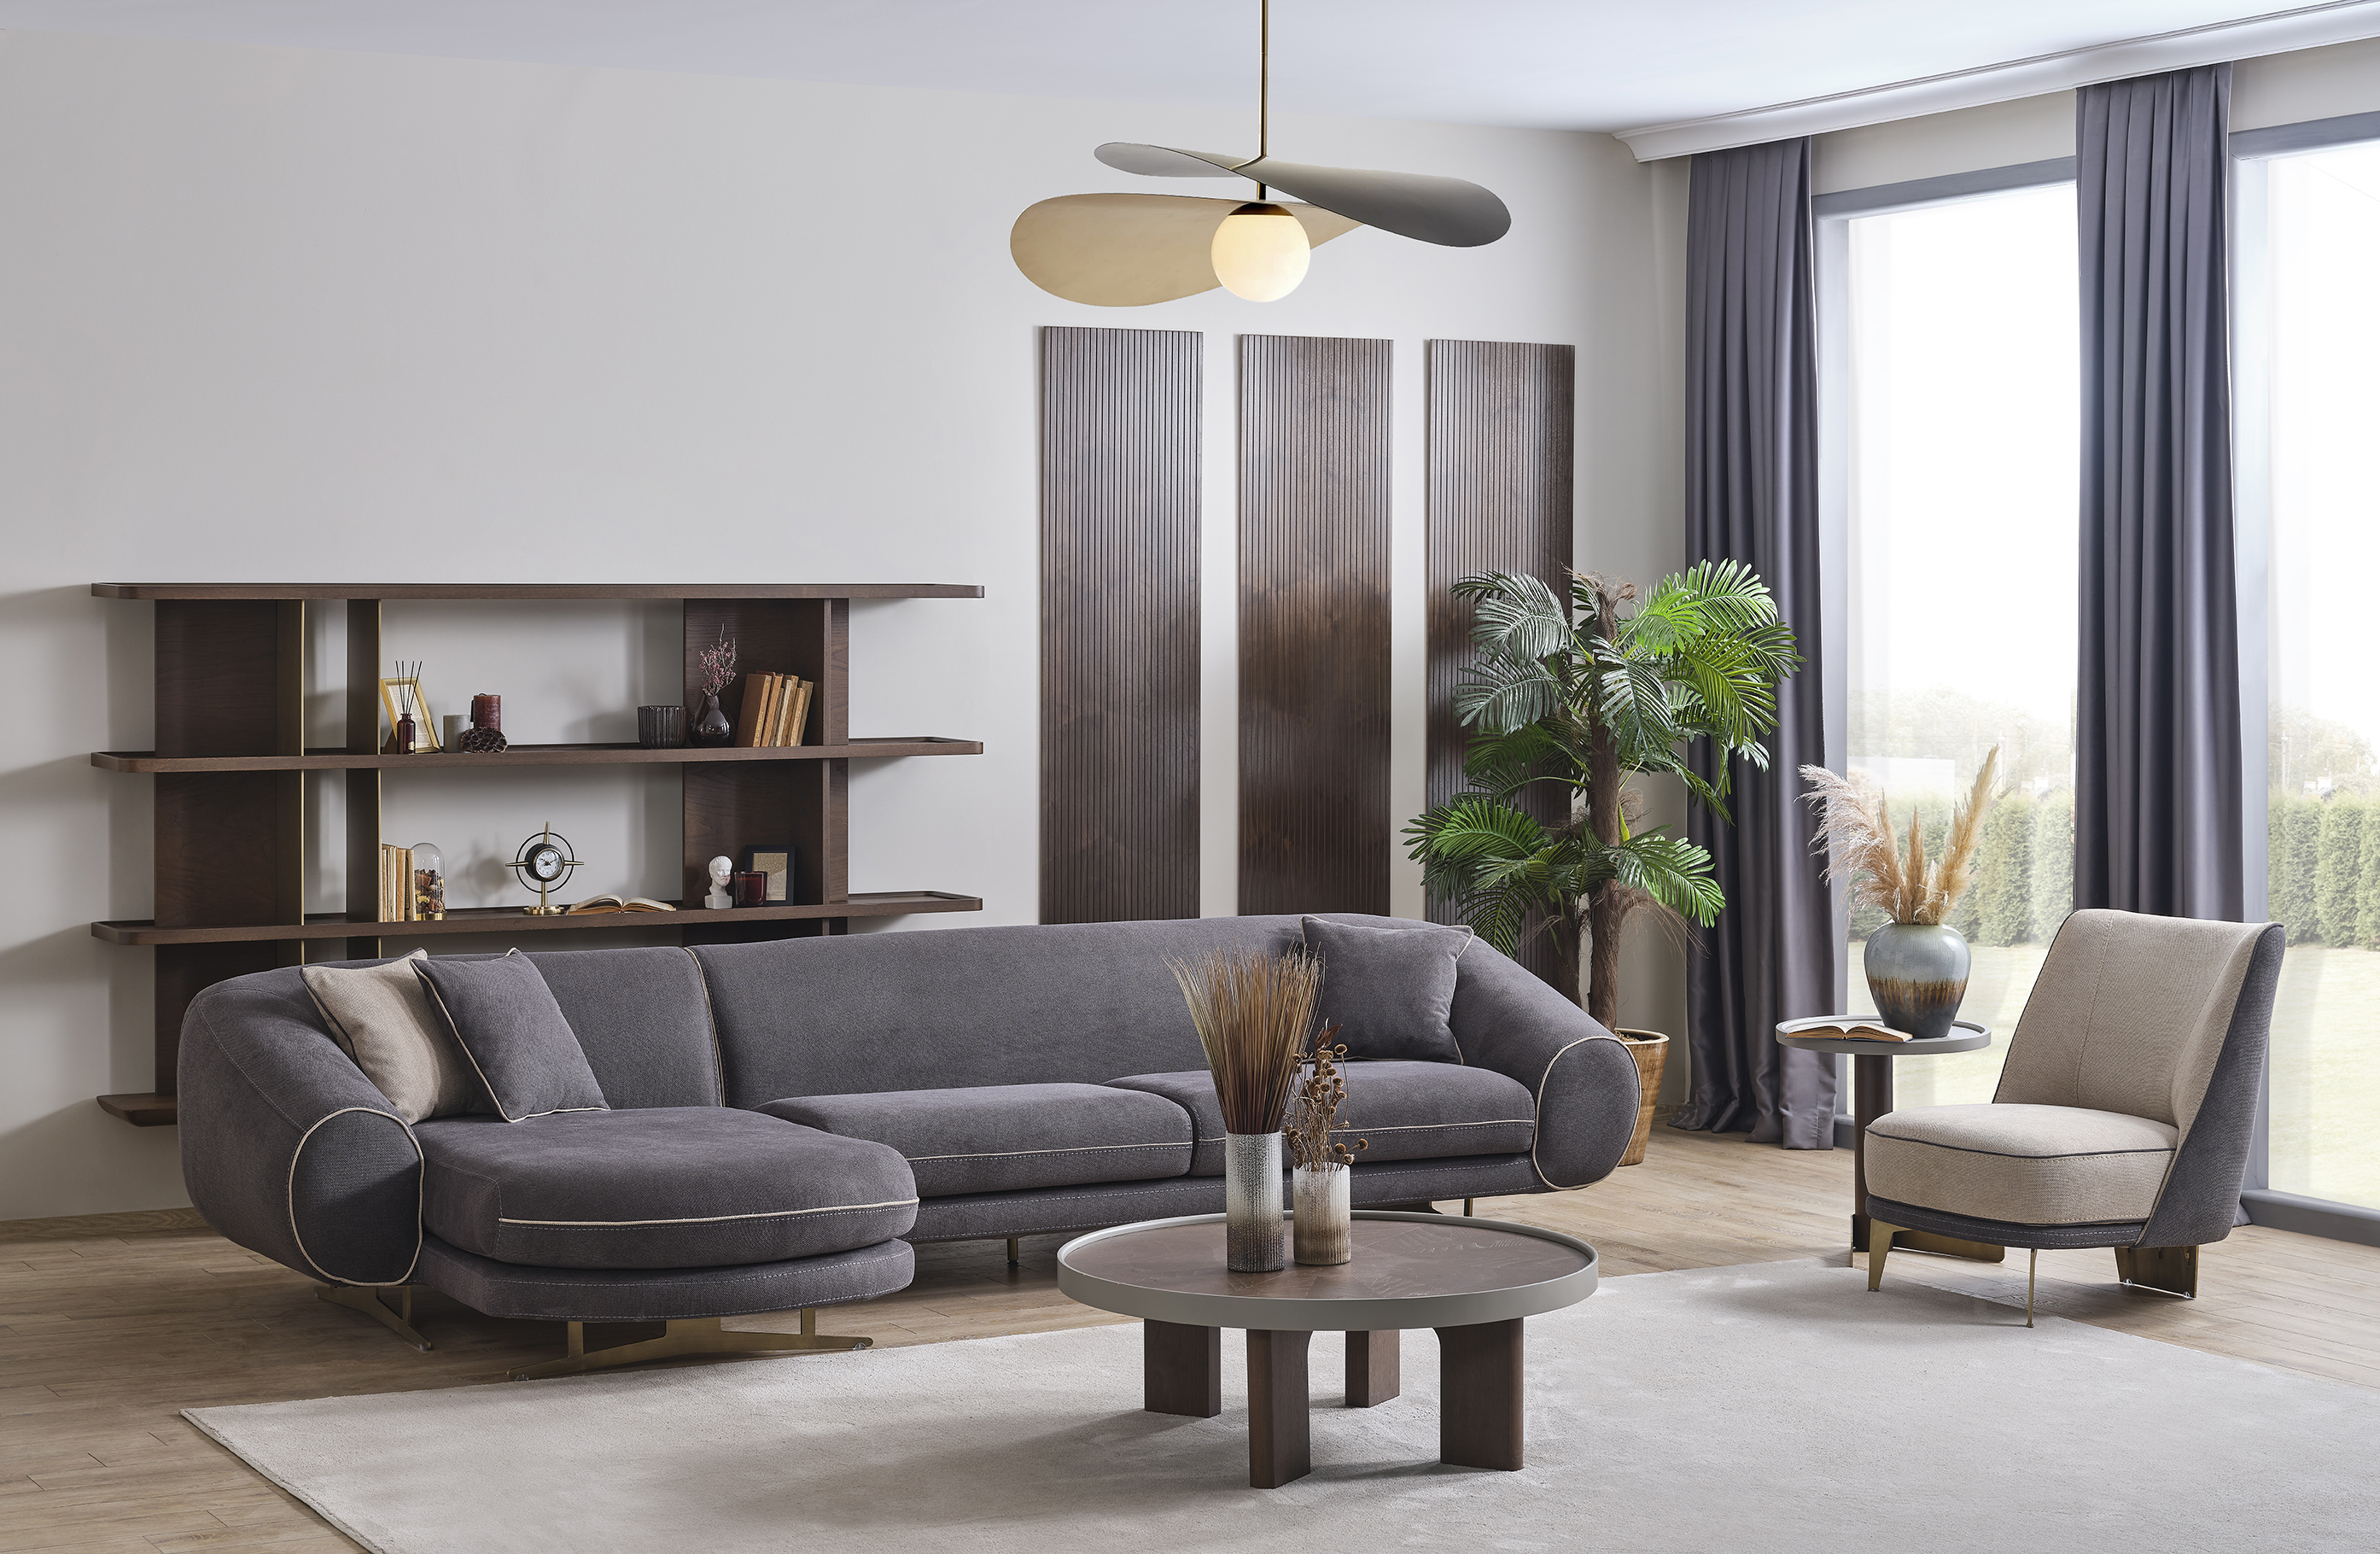 BONO KOLTUK TAKIMI | Products Group | MOBESKO - Furniture of the World